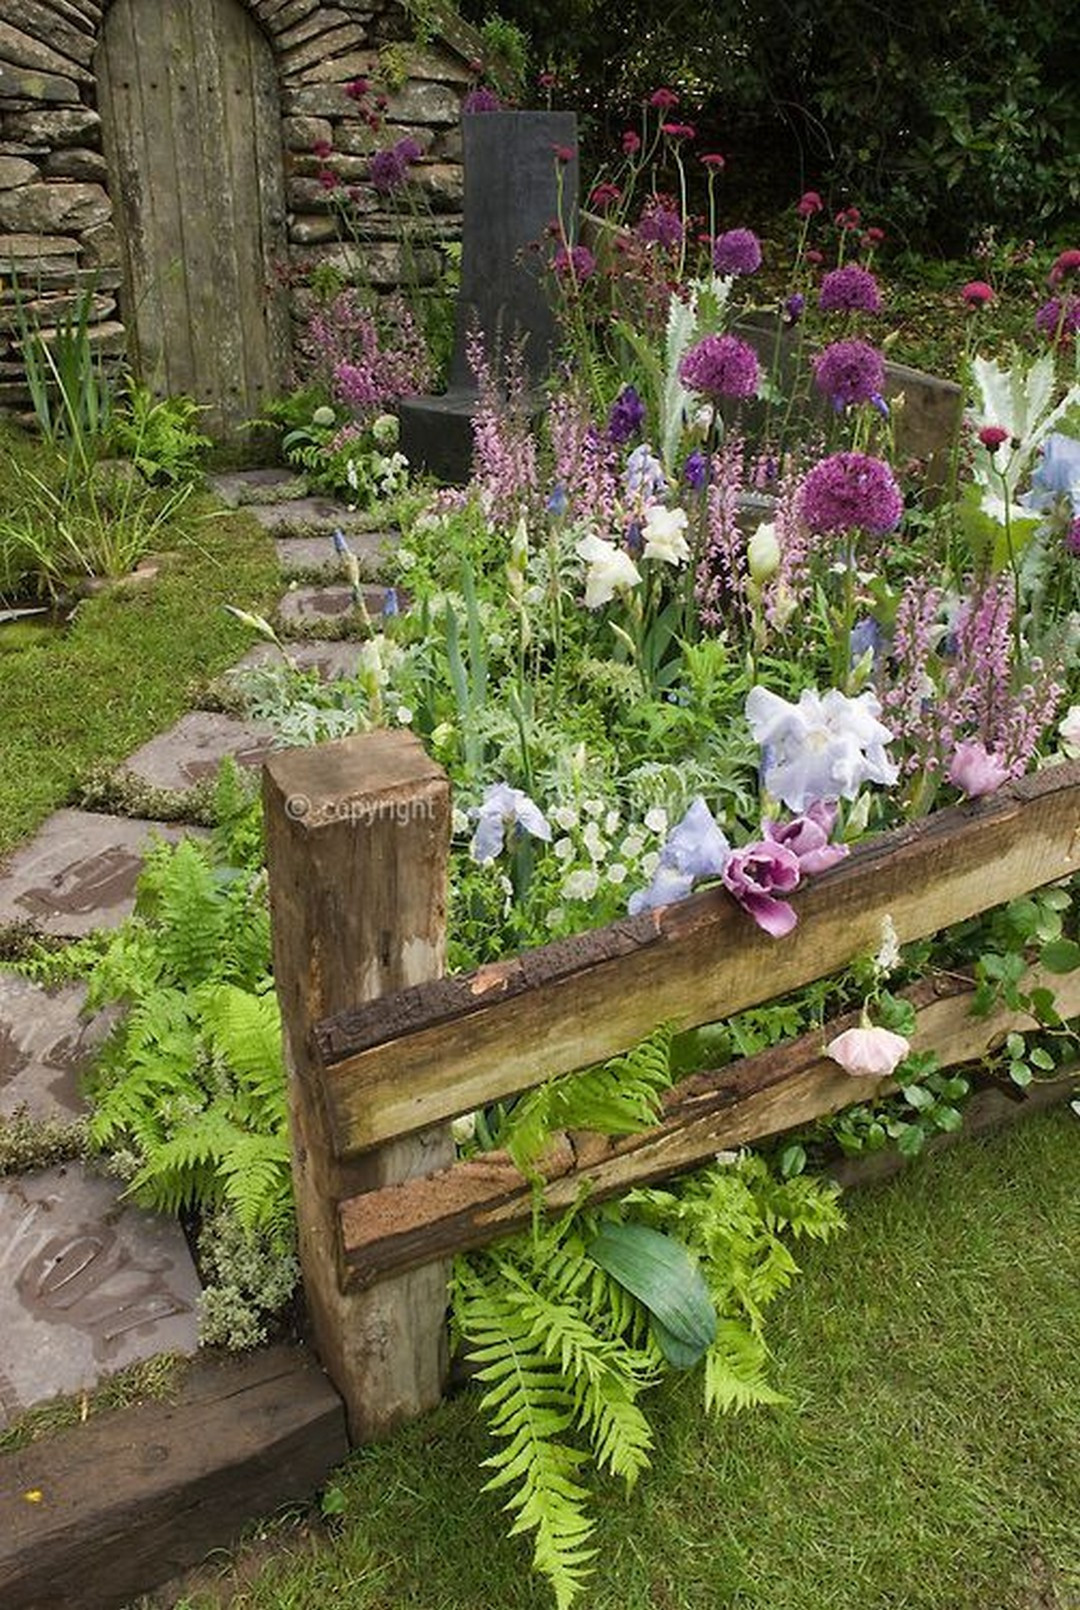 Best ideas about Garden Ideas Pinterest
. Save or Pin Best DIY Cottage Garden Ideas From Pinterest 20 Now.